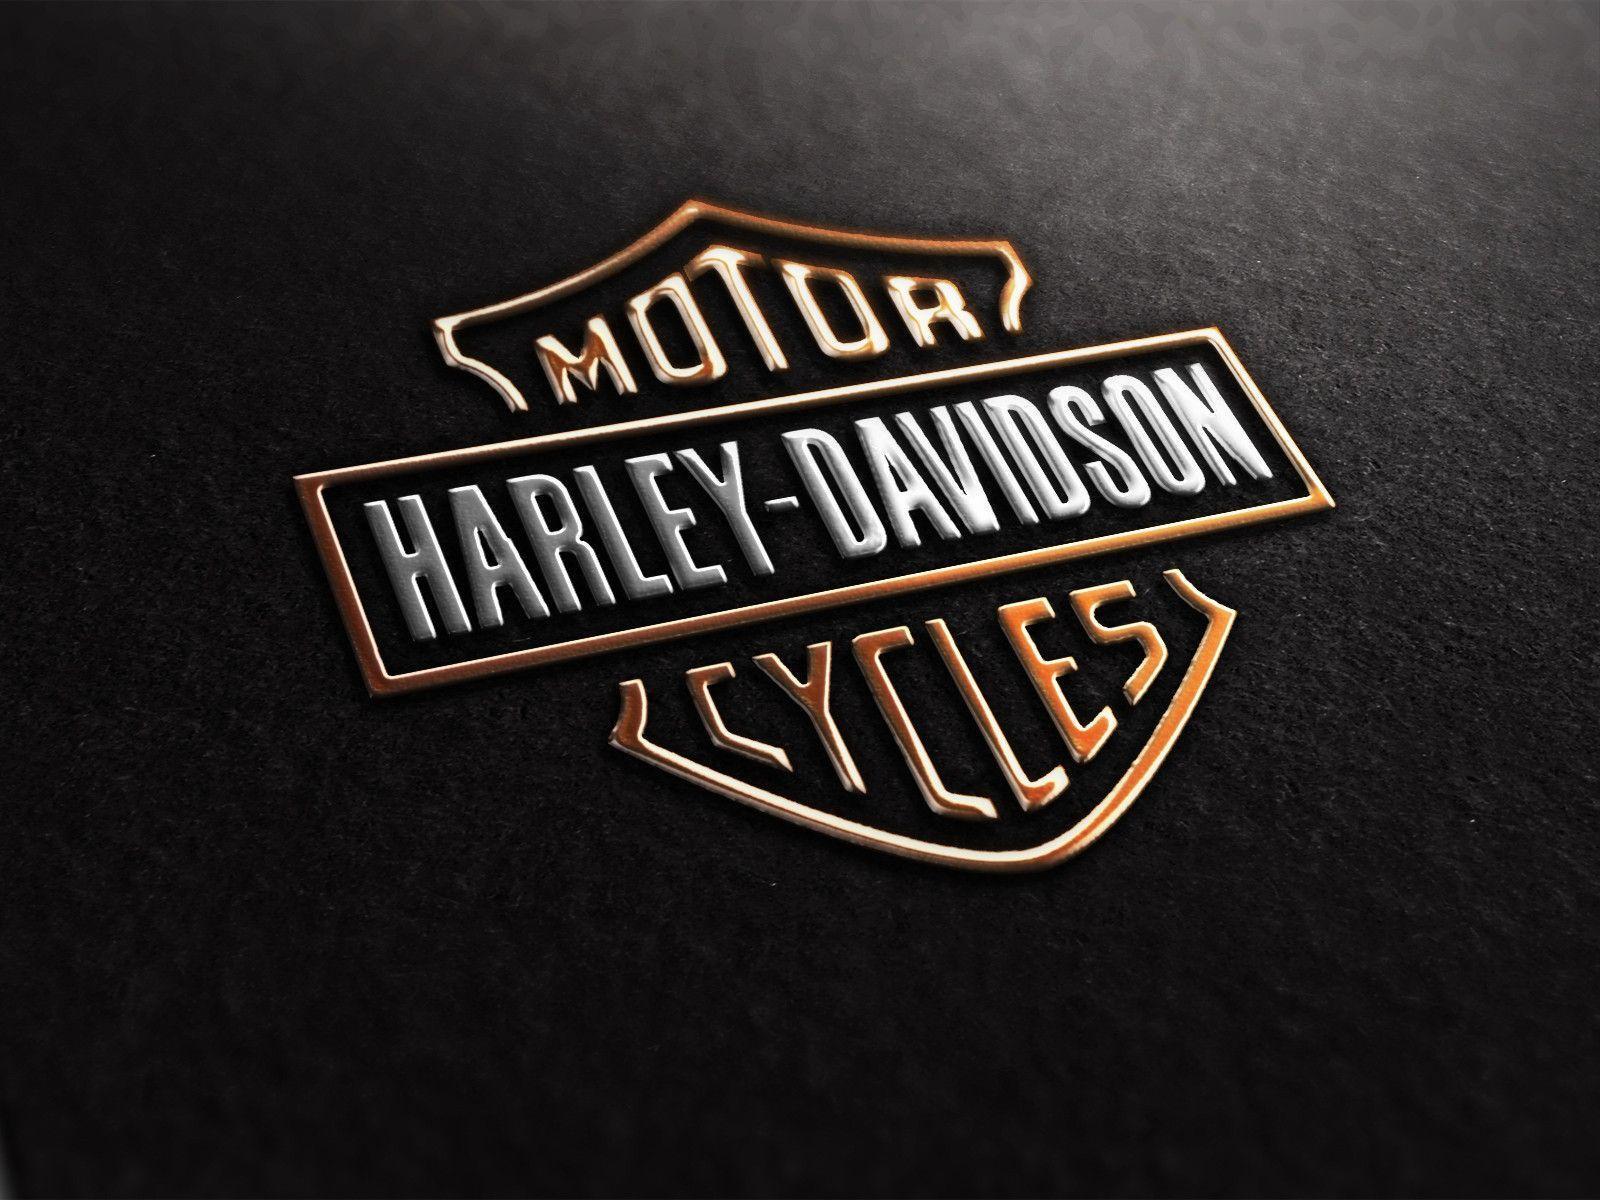 Harley Davidson Logo Wallpaper Free Desk HD Wallpaper